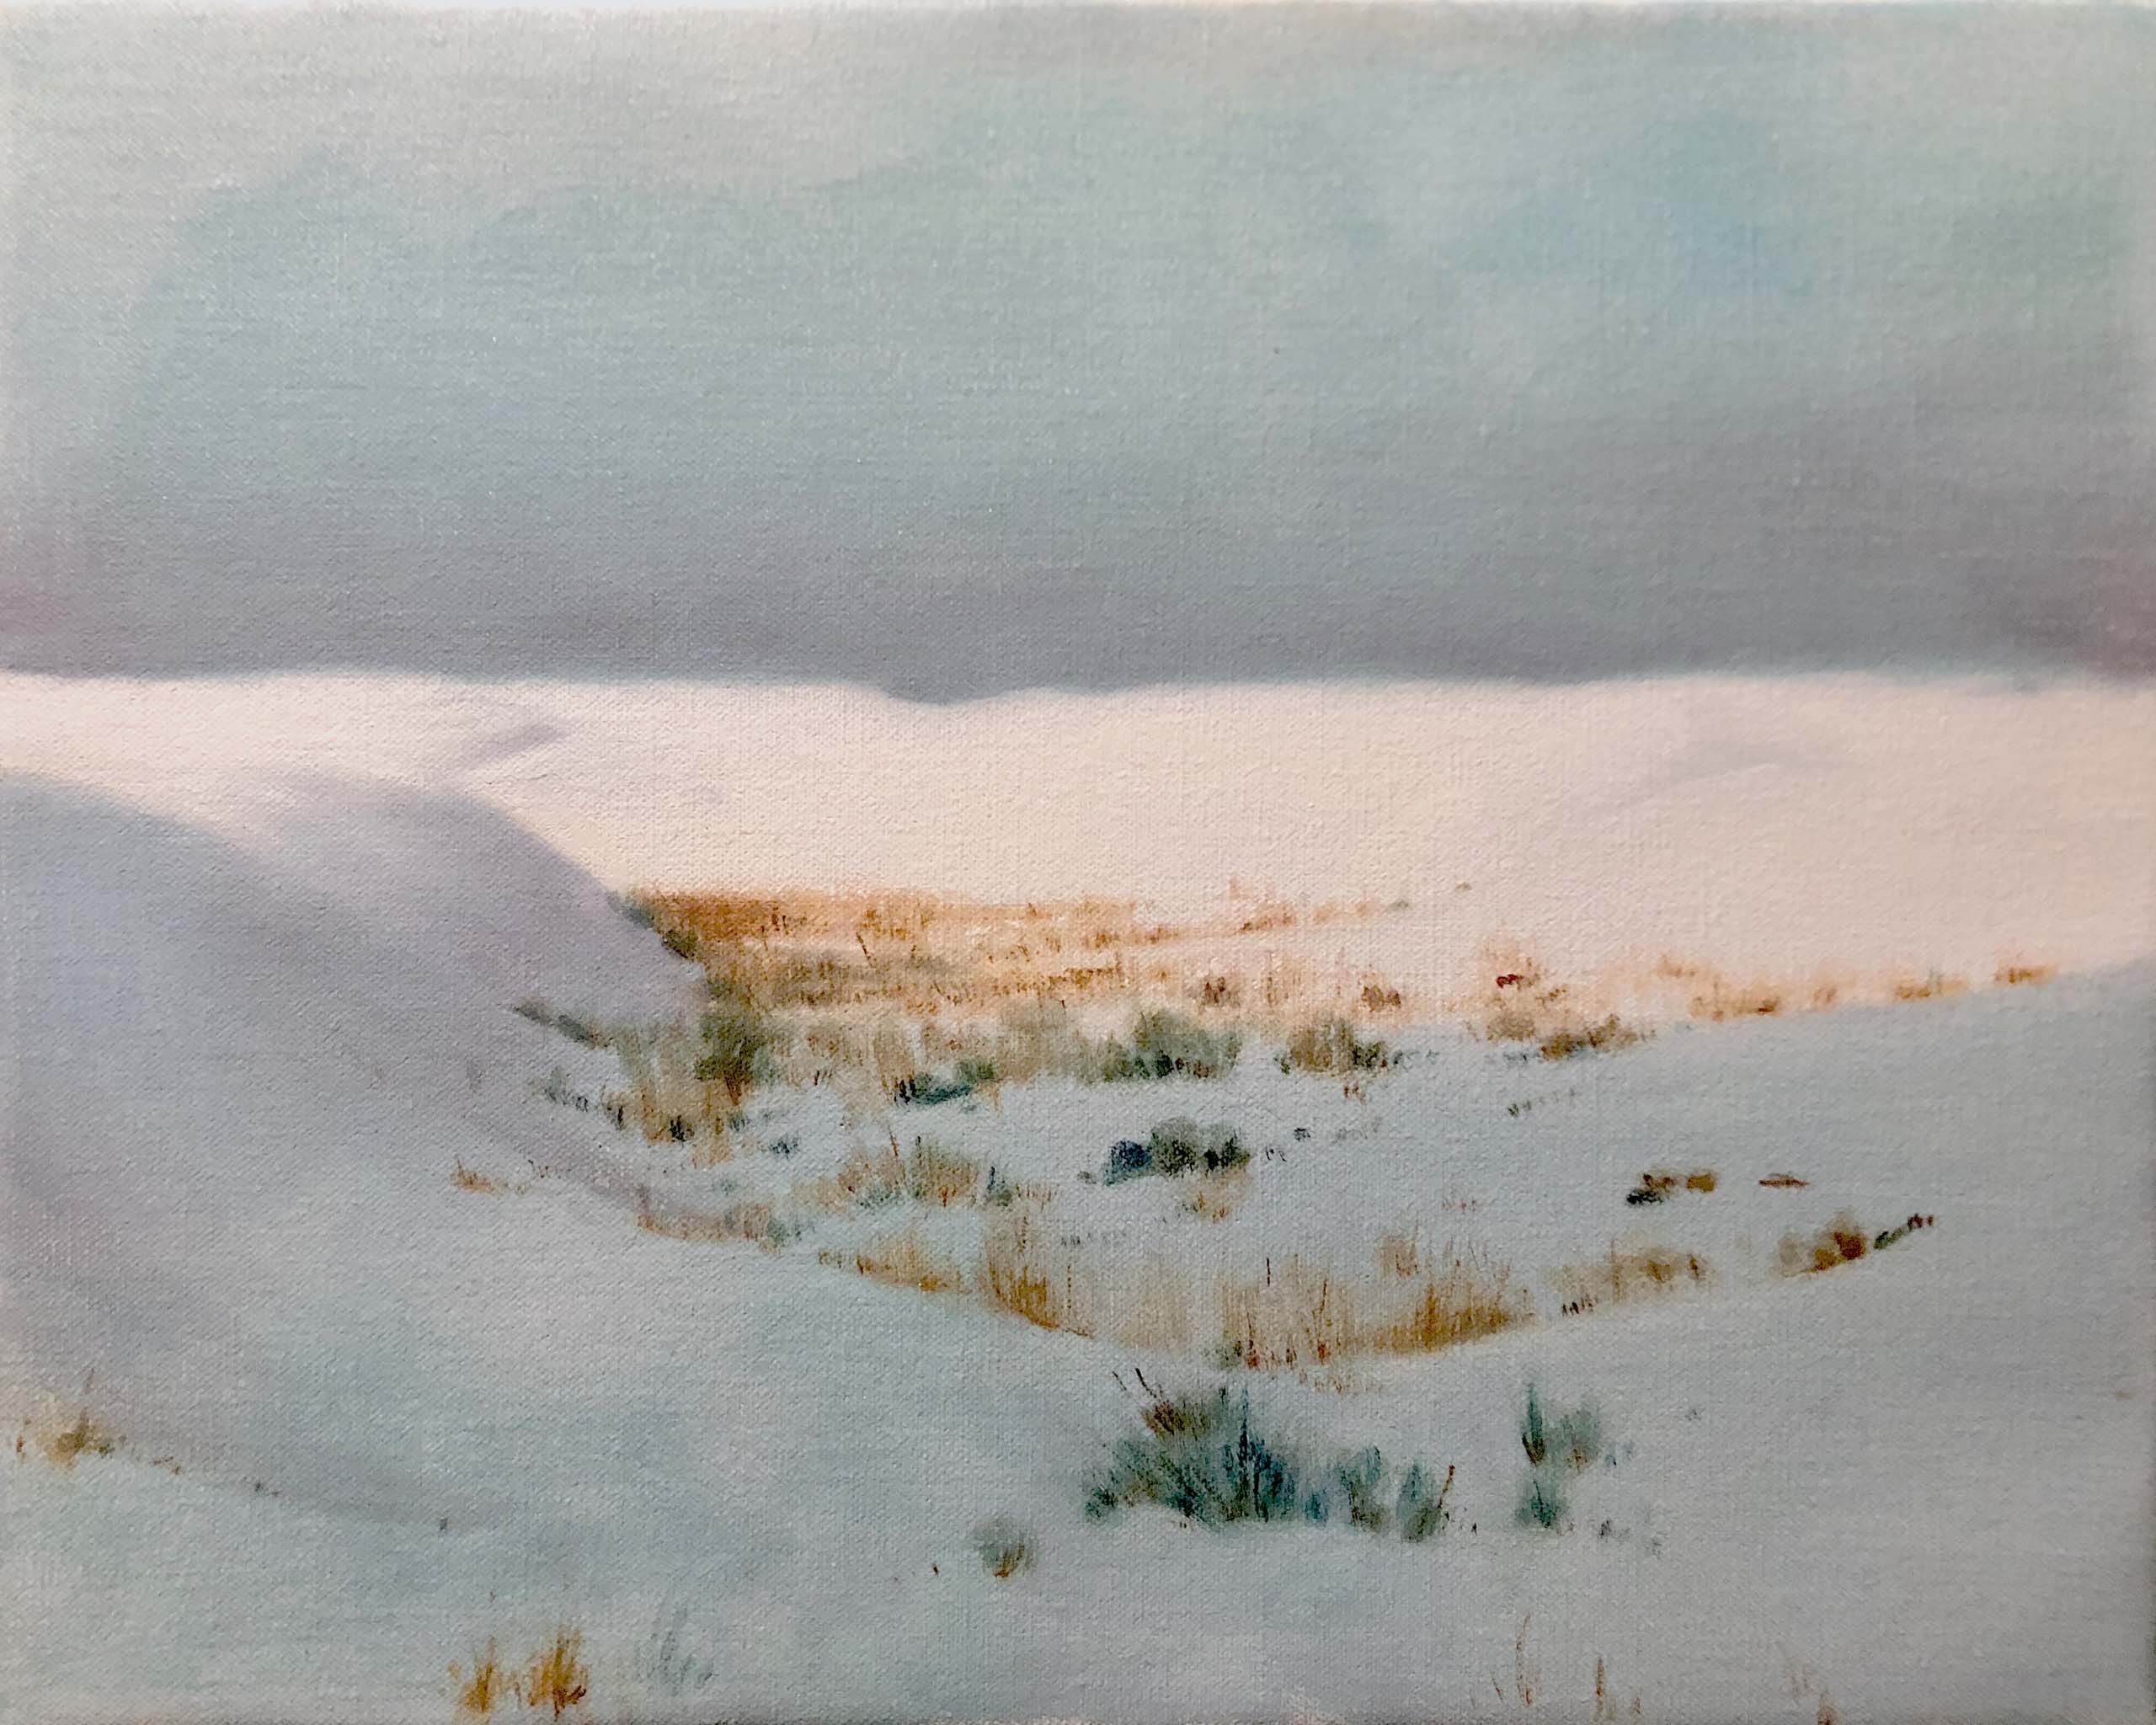 Gowen Dicker, "White Sands NM Dune 3.00pm", Oil on canvas, 30 x 38 cm, 2021